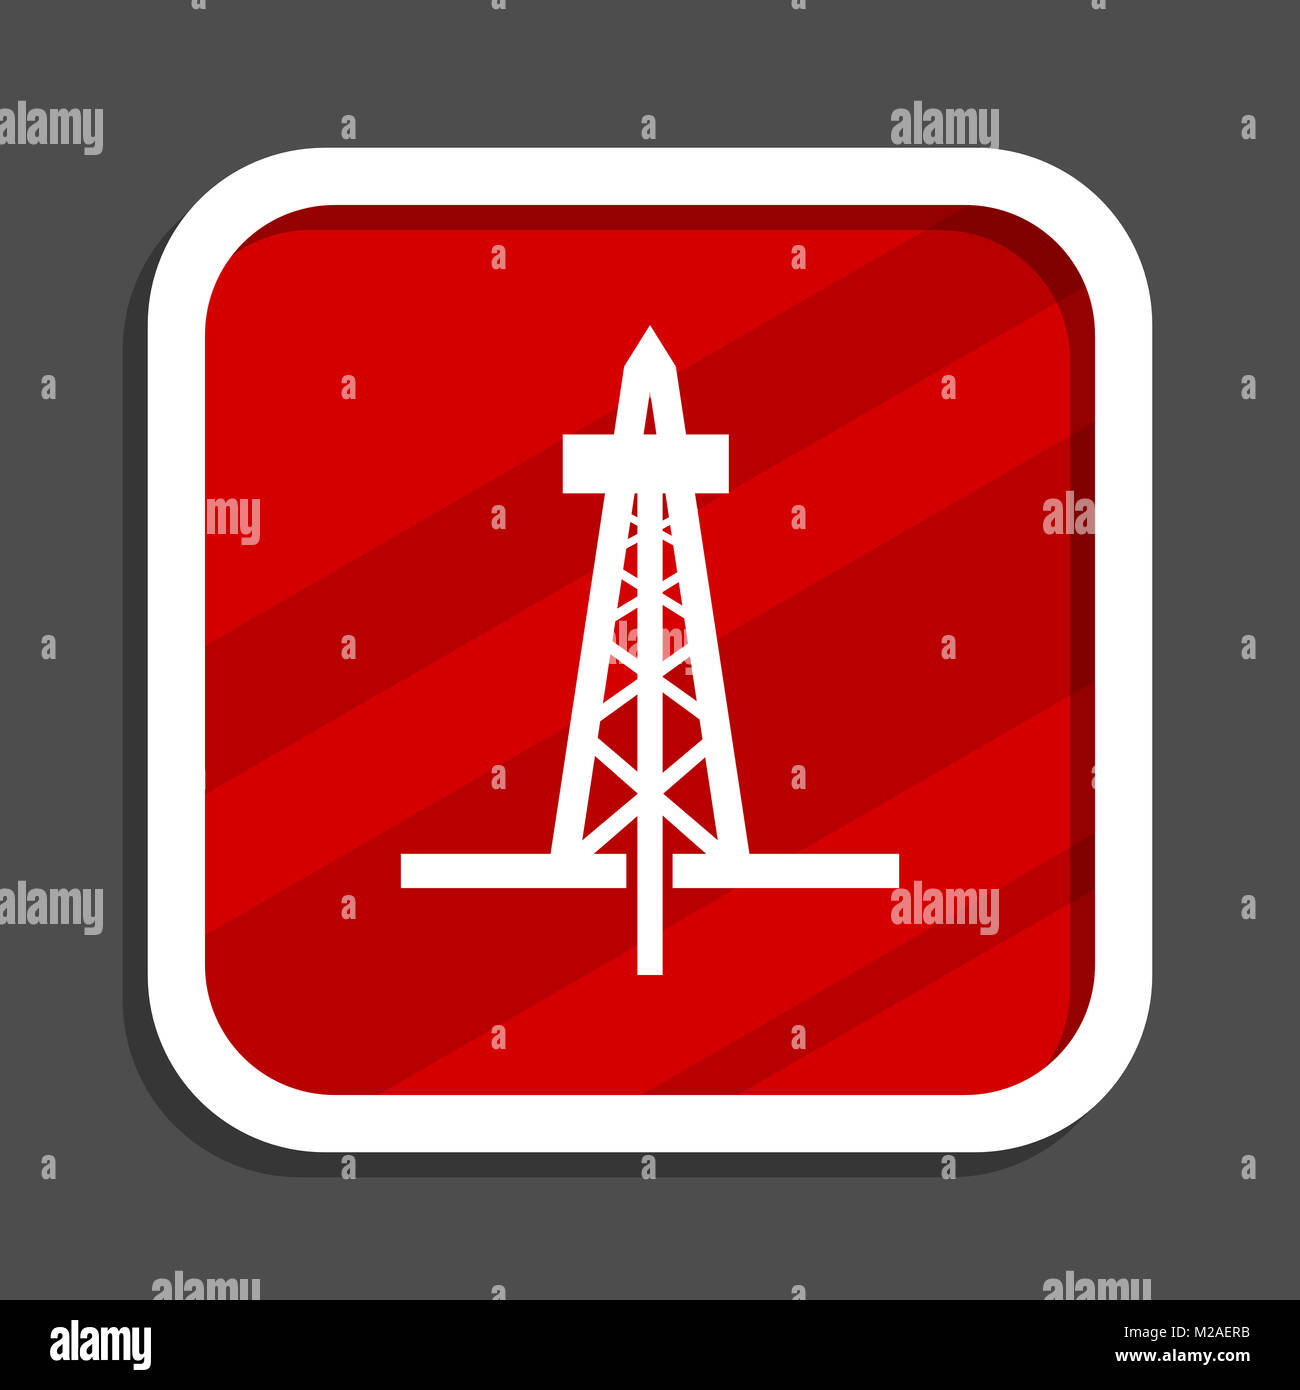 Drilling icon. Flat design square internet banner. Stock Photo